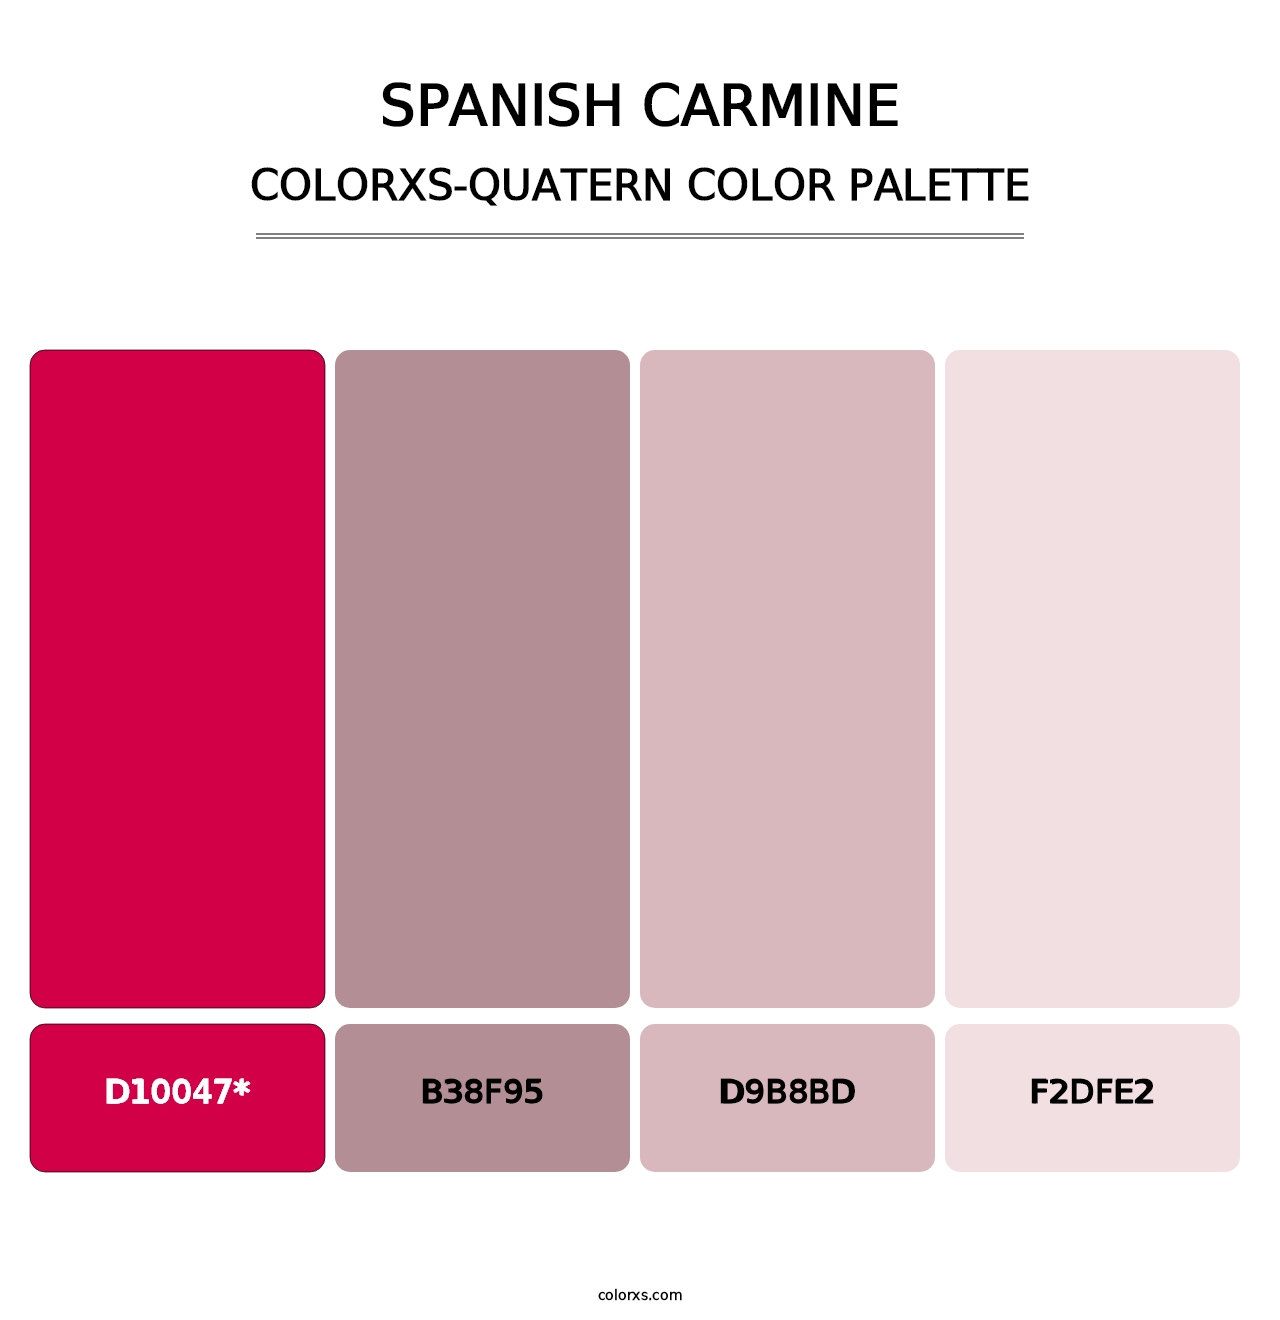 Spanish Carmine - Colorxs Quatern Palette